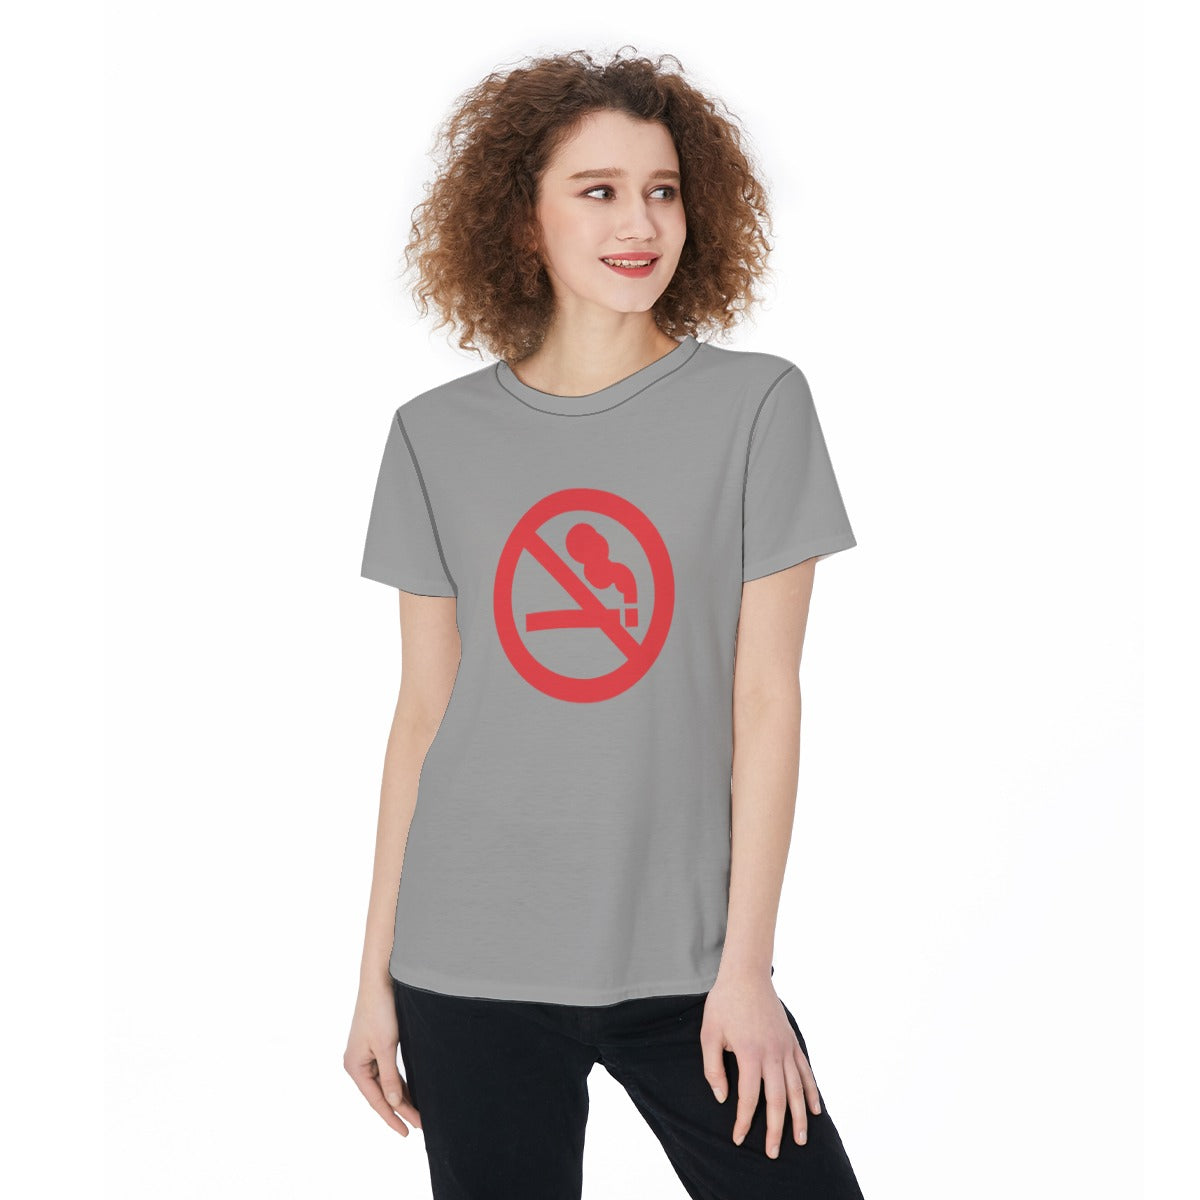 Marceline’s “No Smoking” Shirt